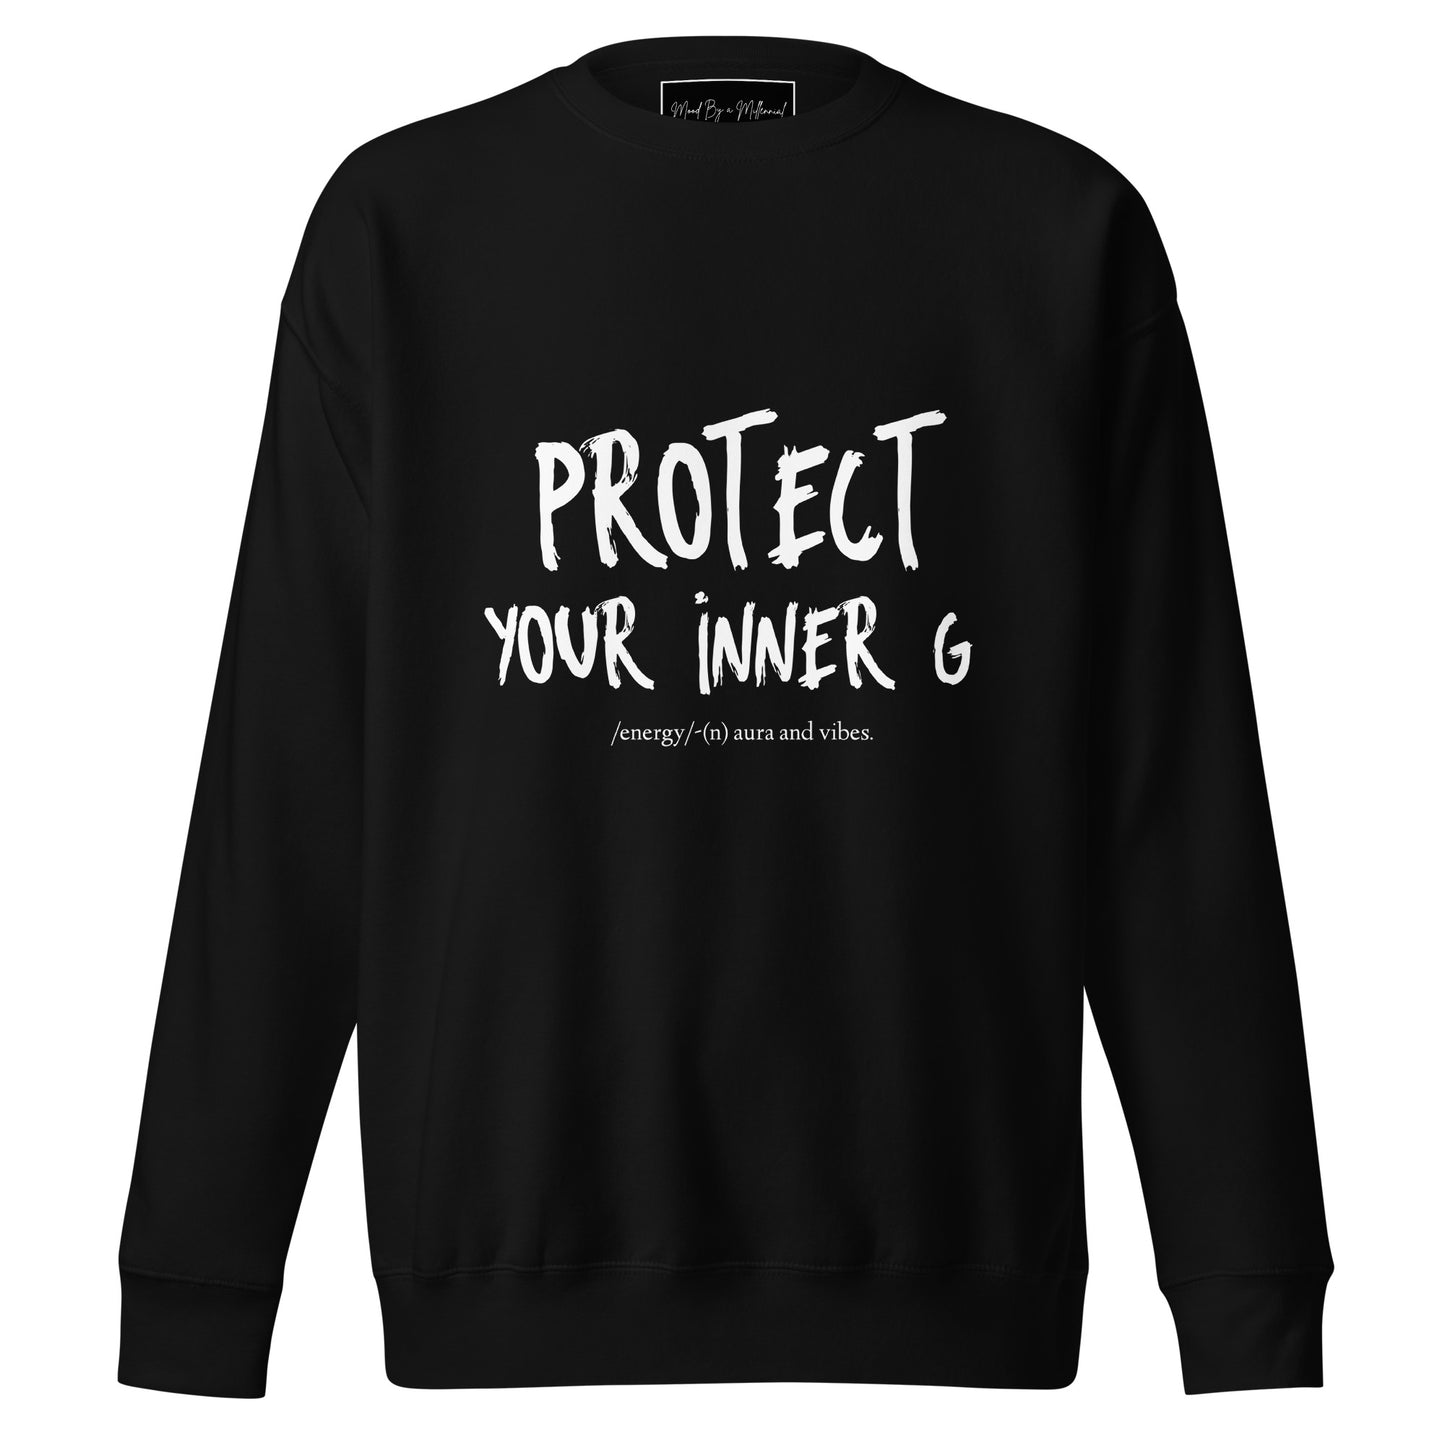 Protect Your Inner G Sweatshirt